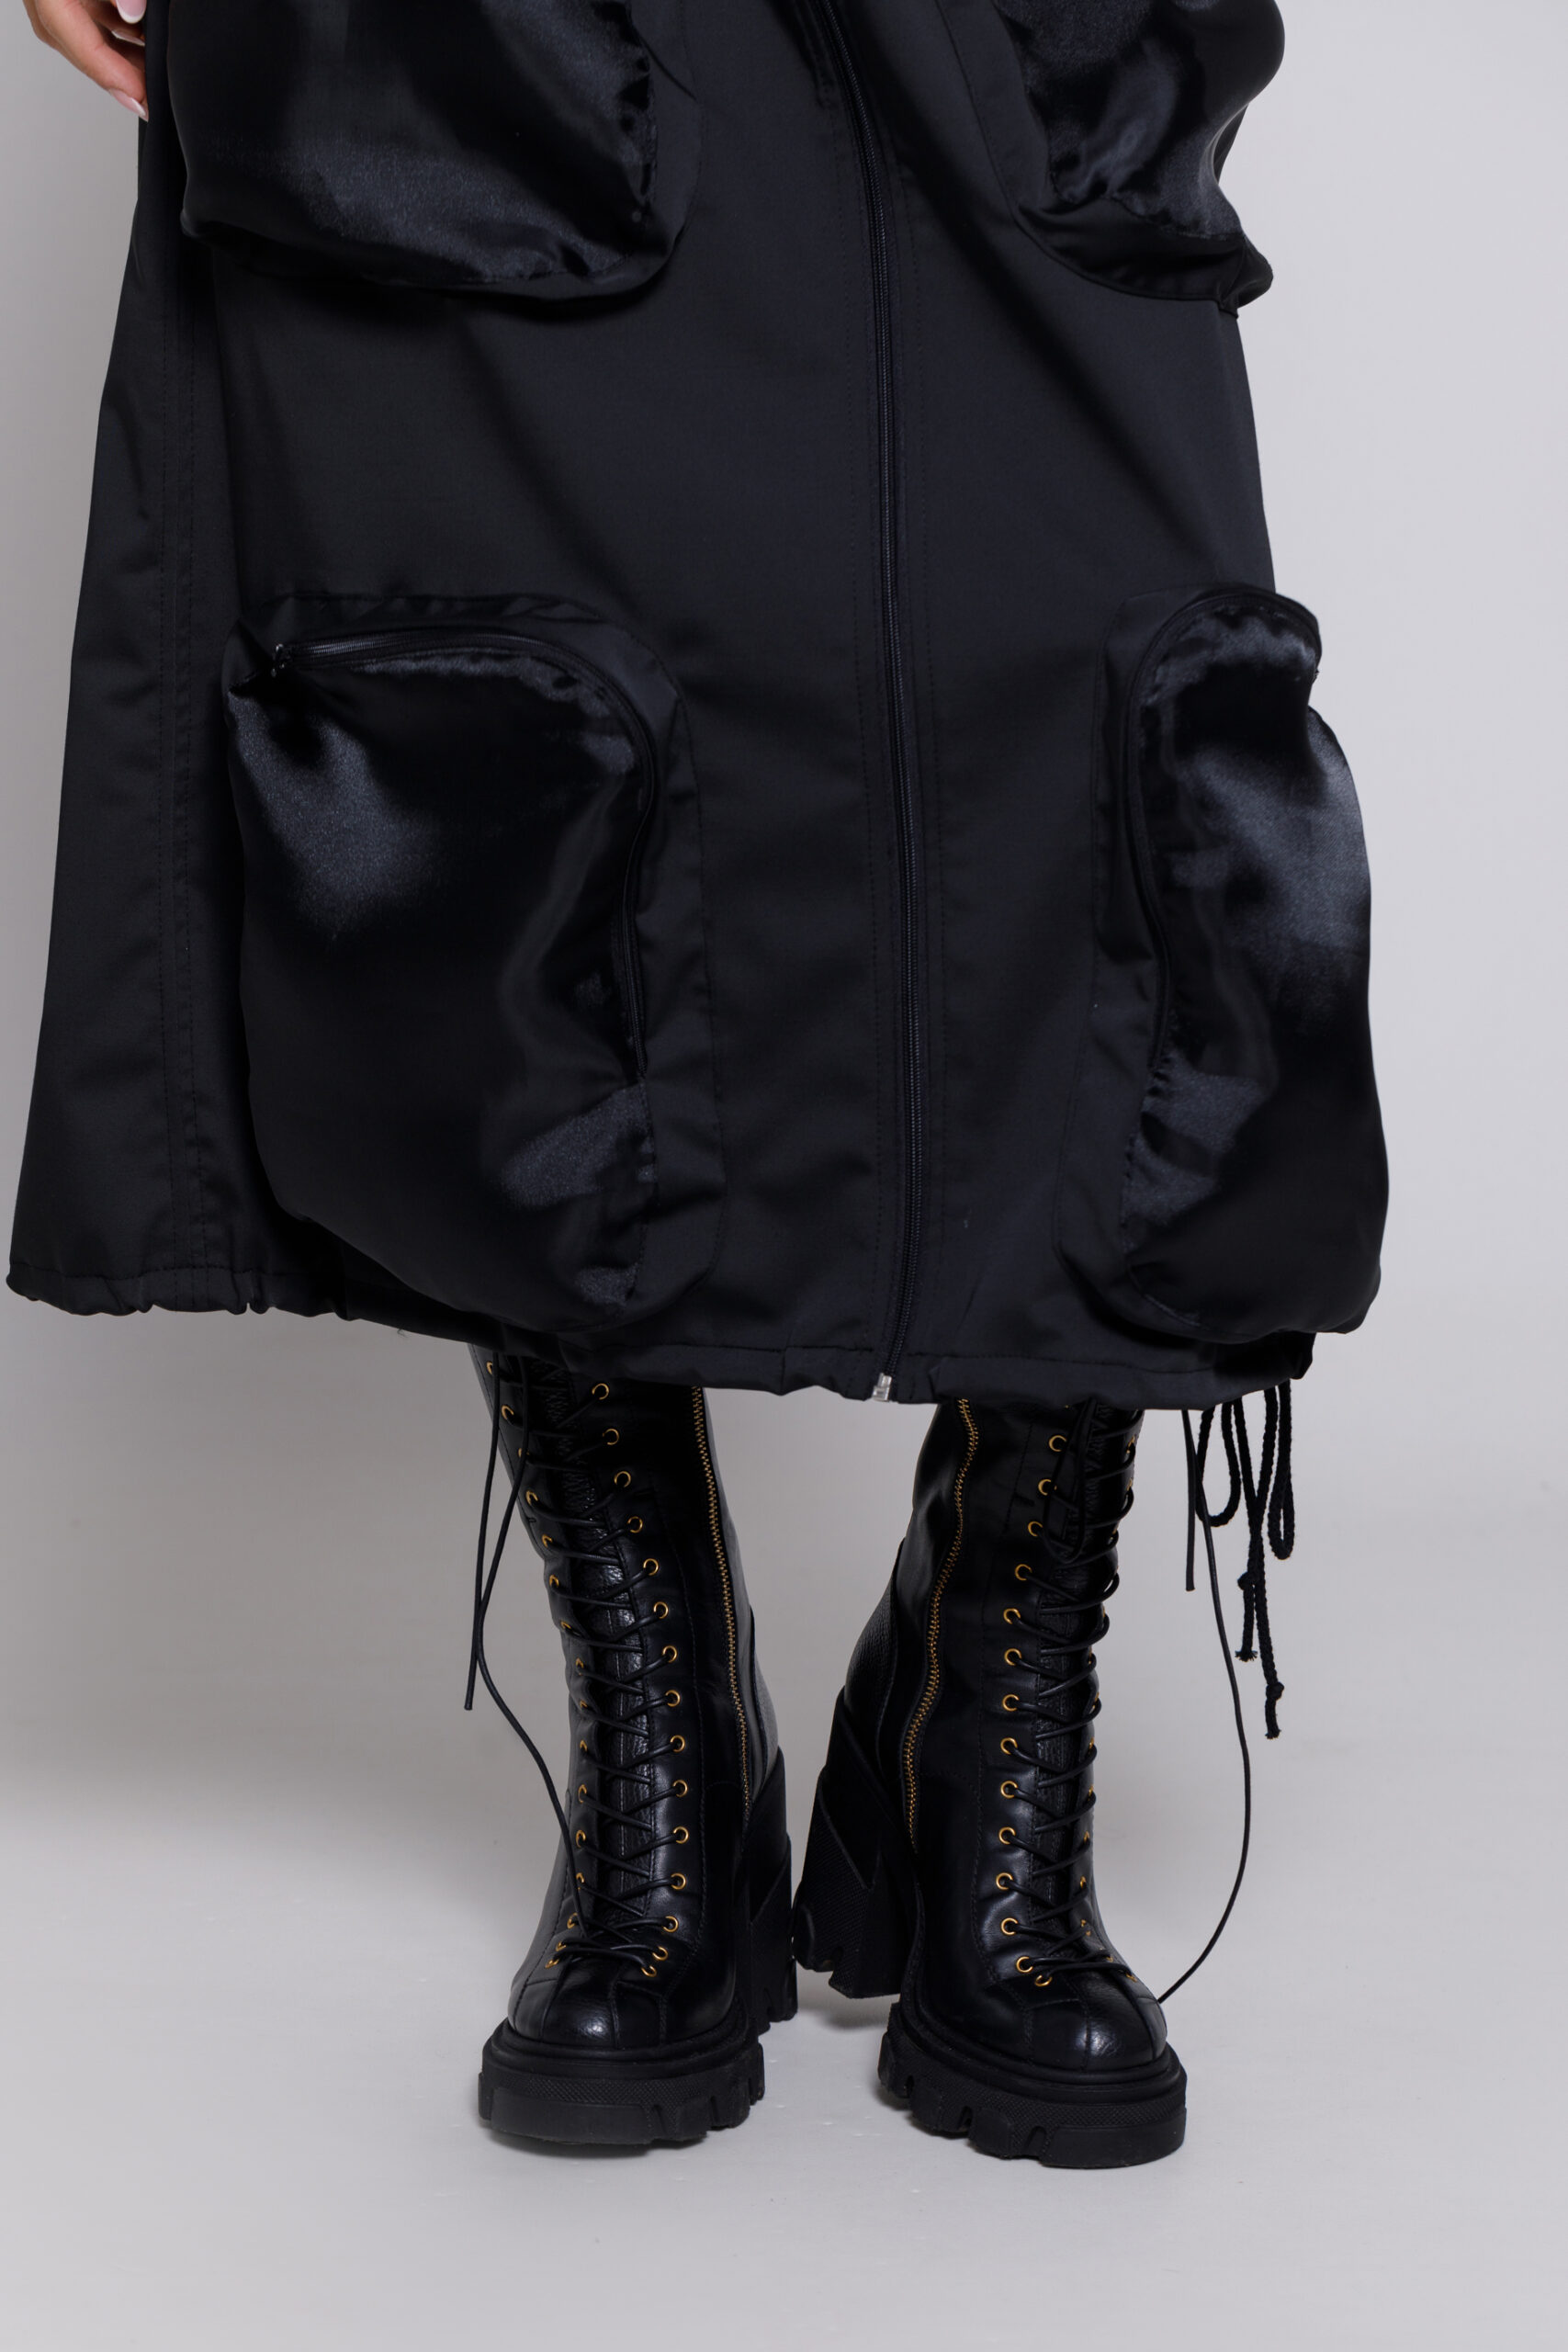 NOLA Black skirt with oversize organza pockets. Natural fabrics, original design, handmade embroidery